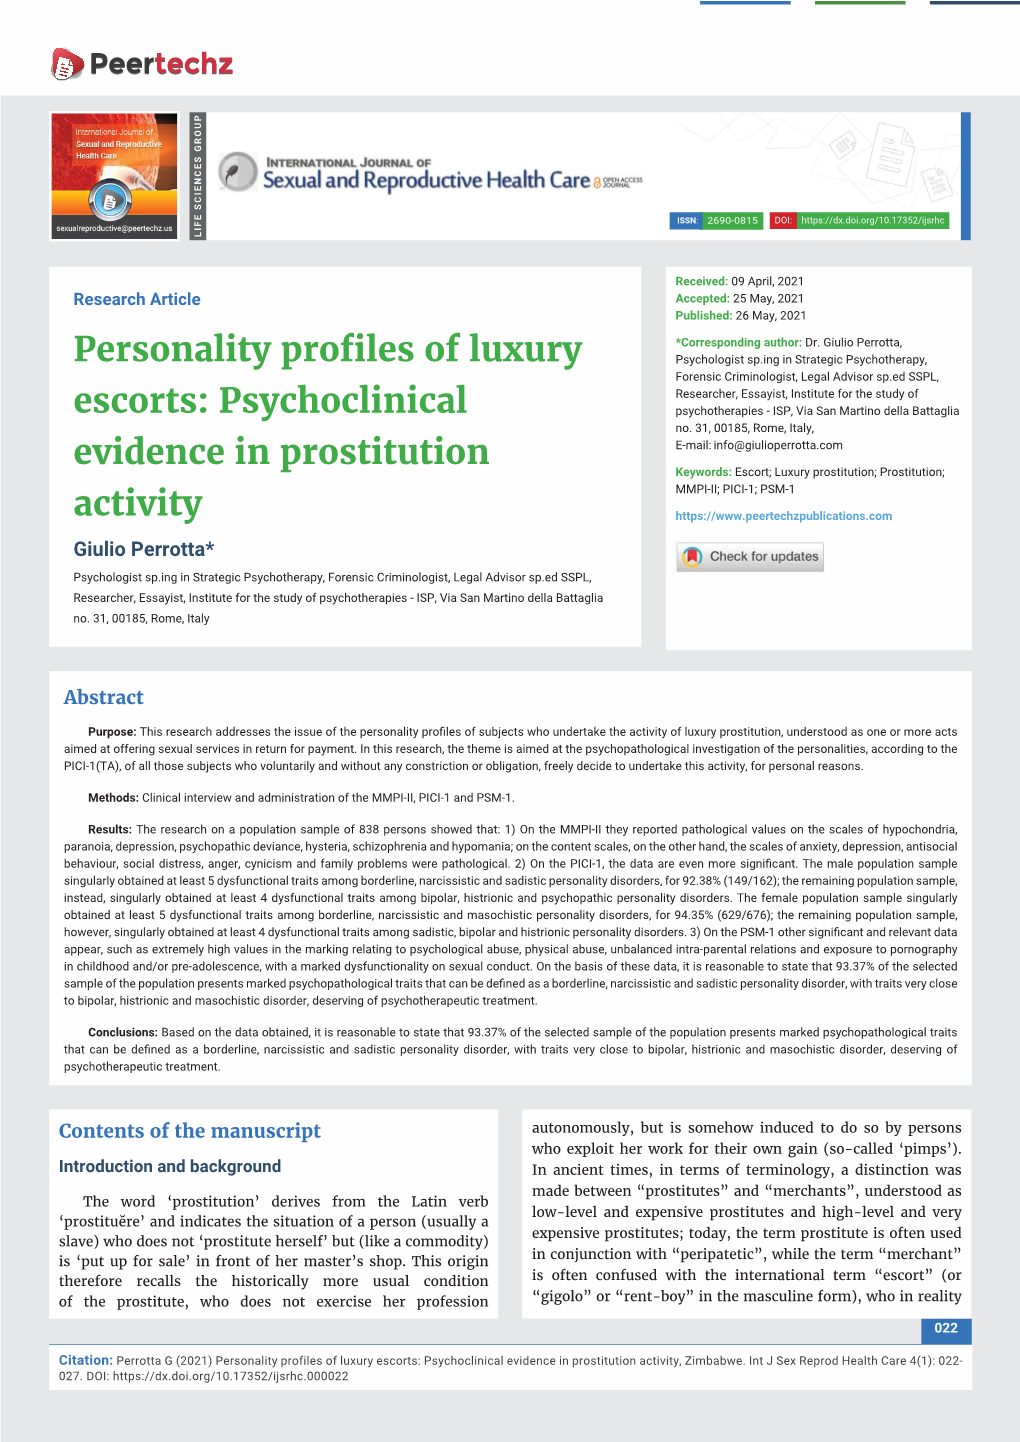 Personality Profiles of Luxury Escorts: Psychoclinical Evidence in Prostitution Activity, Zimbabwe